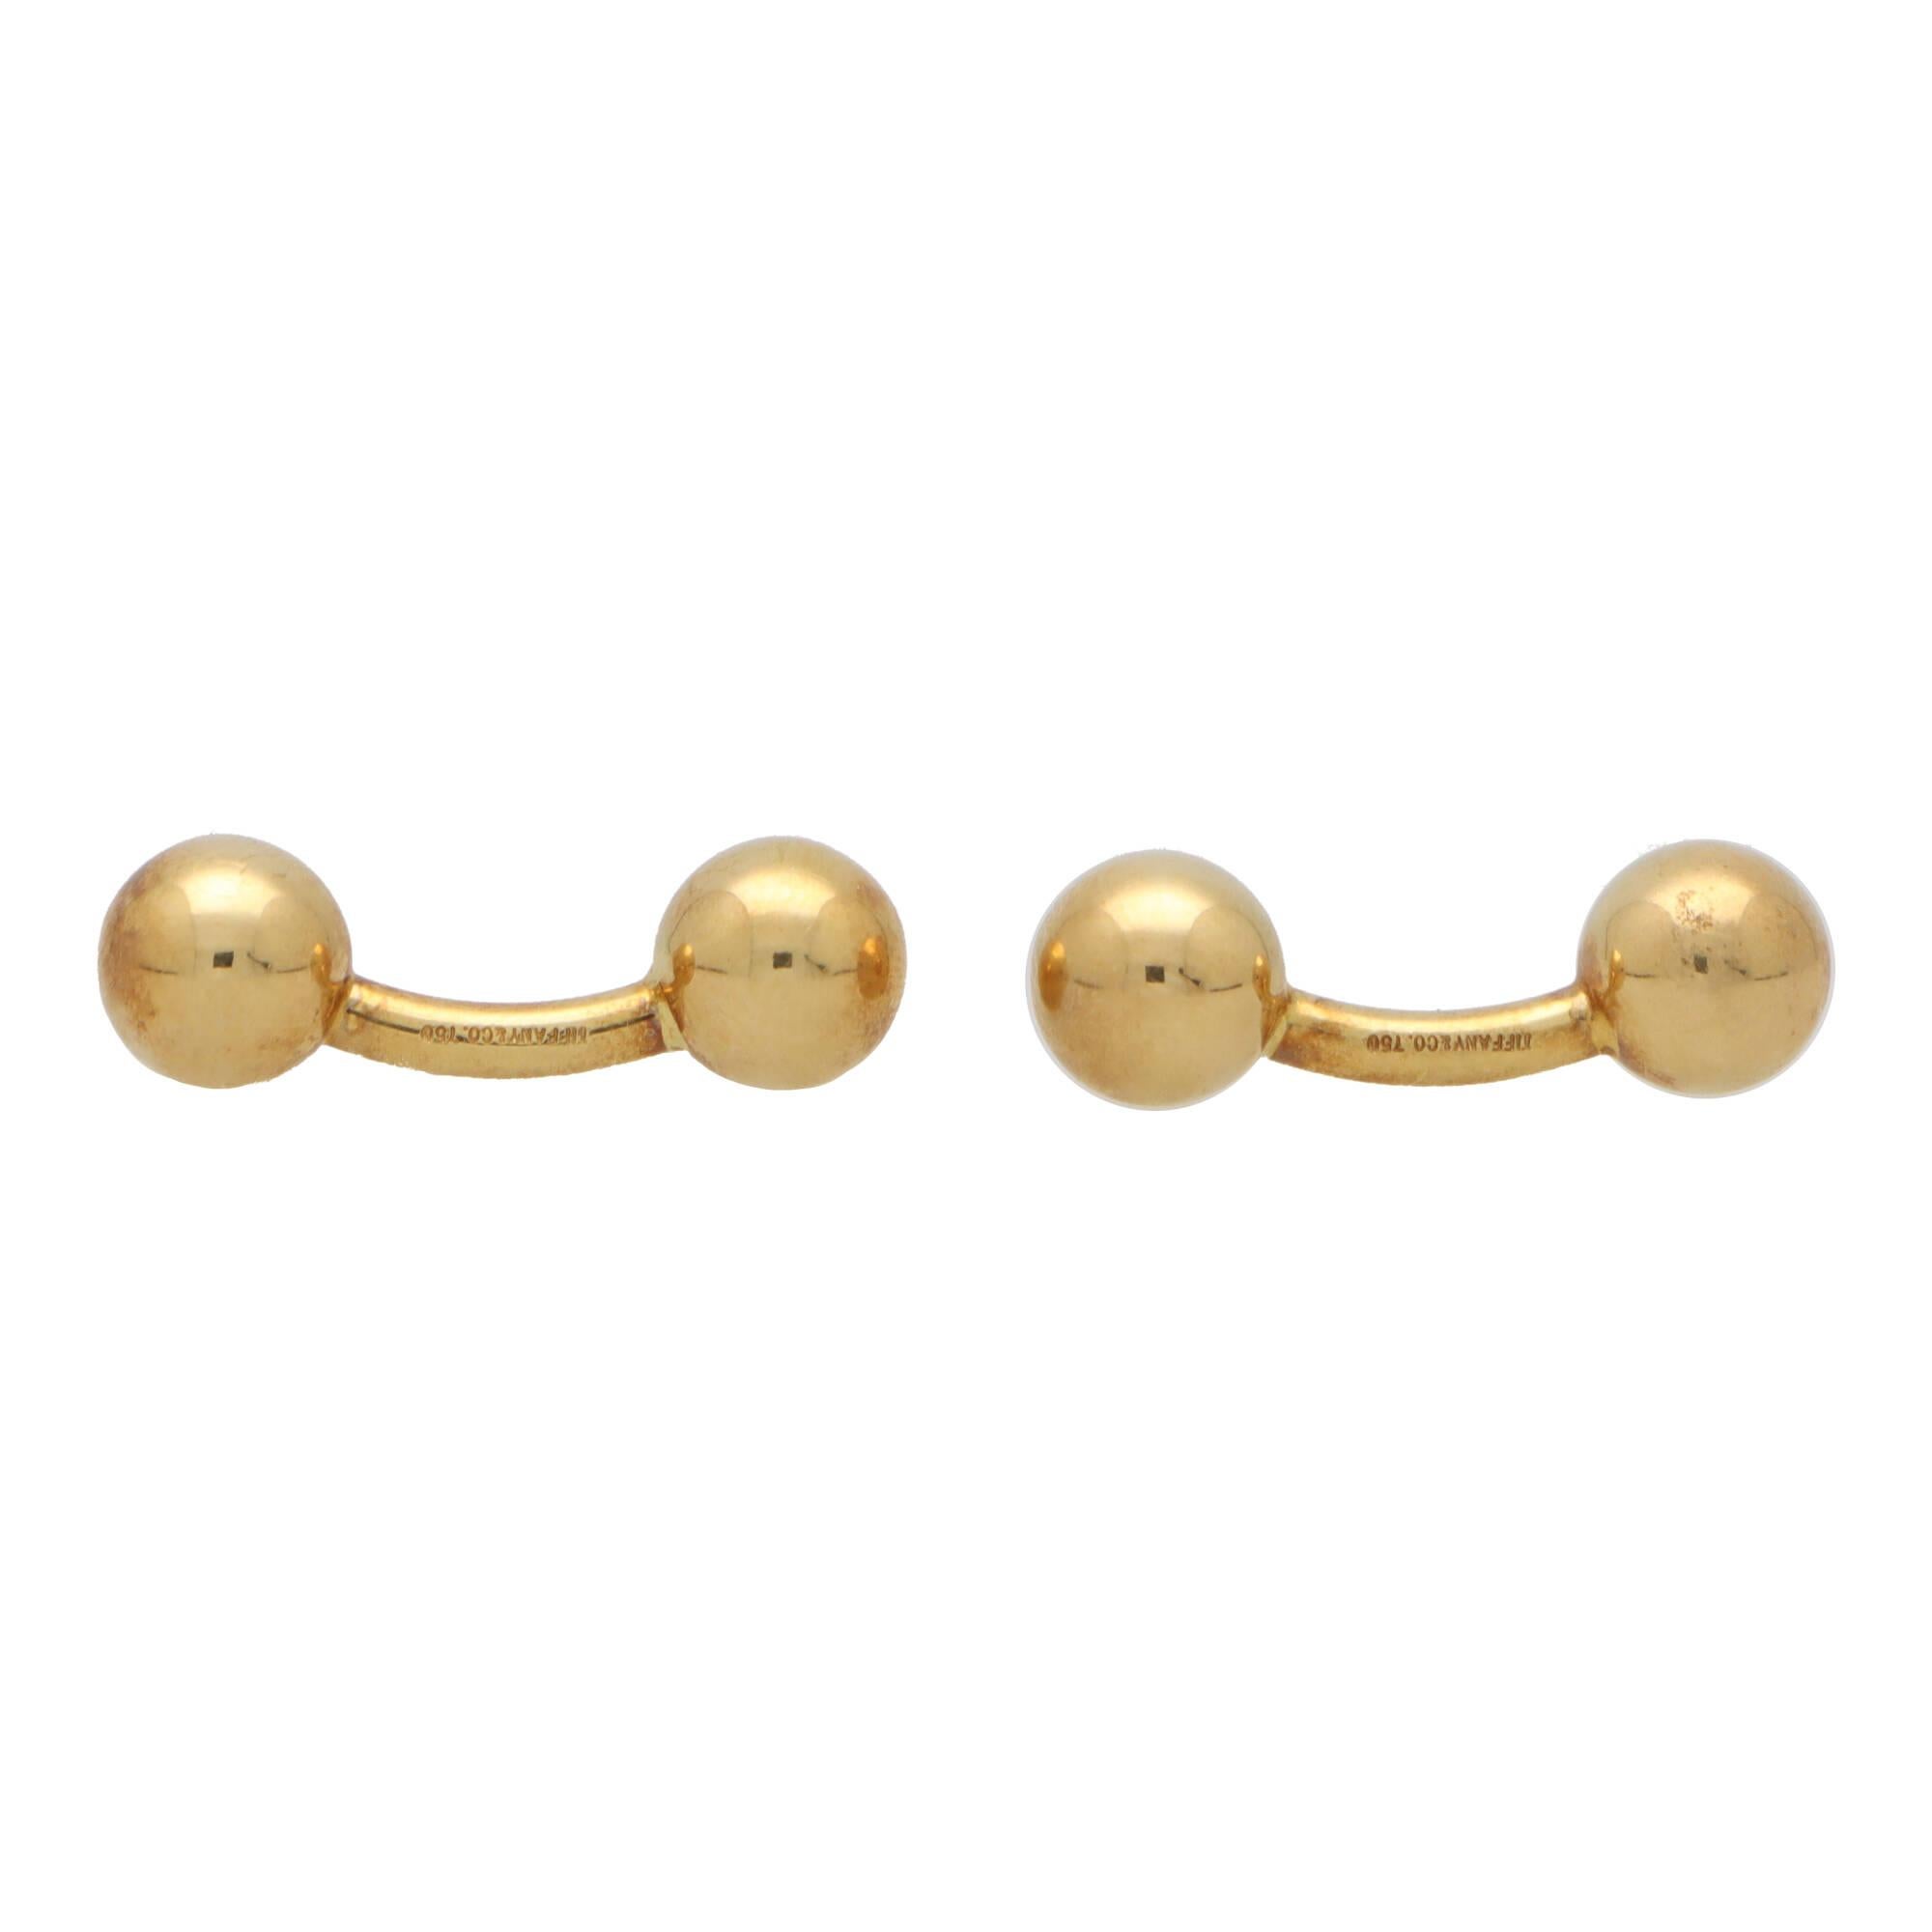 Modern Vintage Tiffany & Co. Golden Ball Bar Cufflinks in 18k Yellow Gold